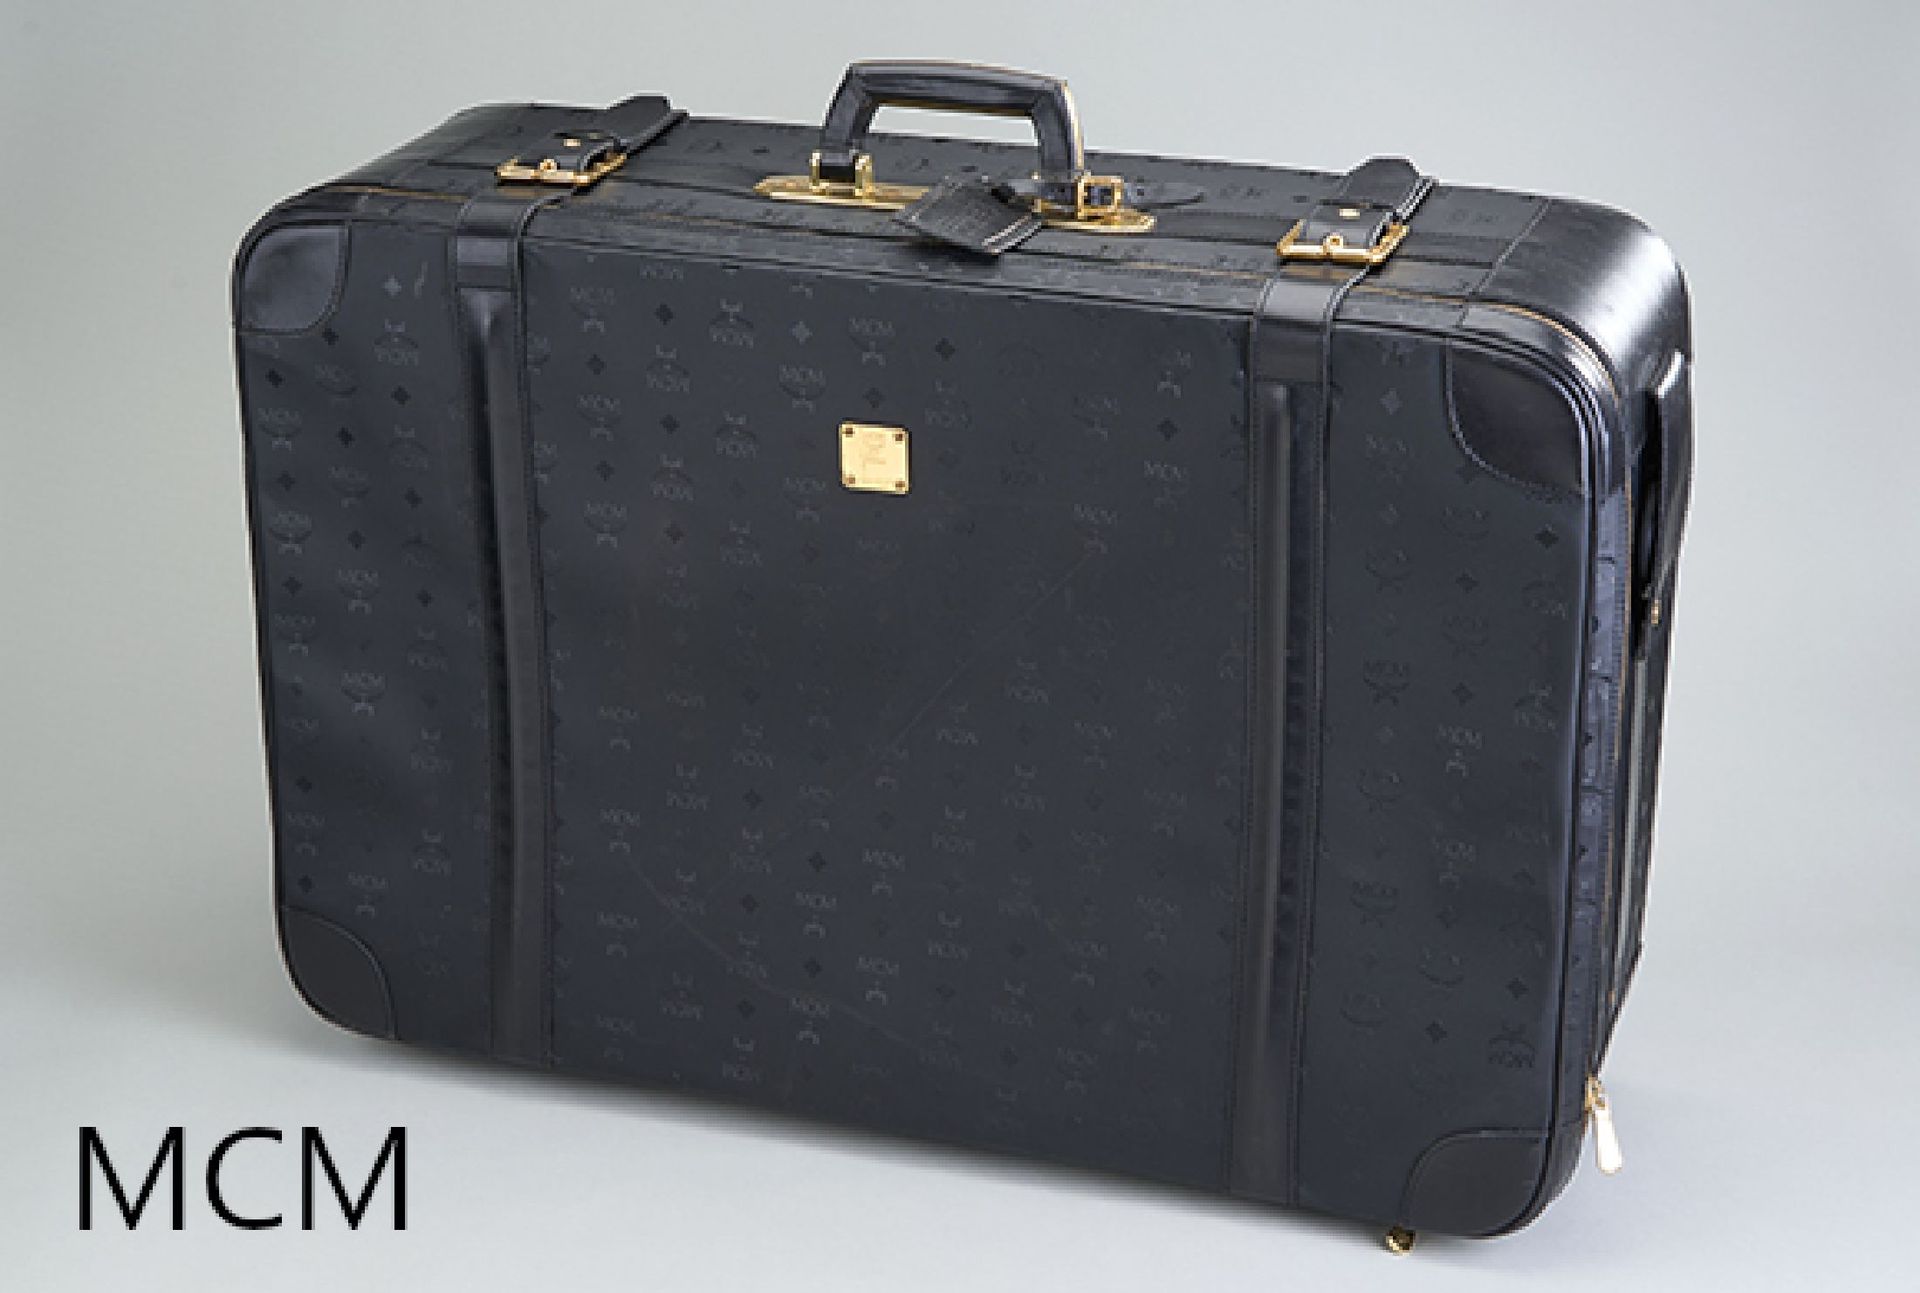 Null MCM 手提箱，黑色 Monogram 帆布，4 个脚轮，镀金金属配件，内衬黑色织物，地址标签，约 75 x 50 x 23 厘米，有较强磨损痕迹